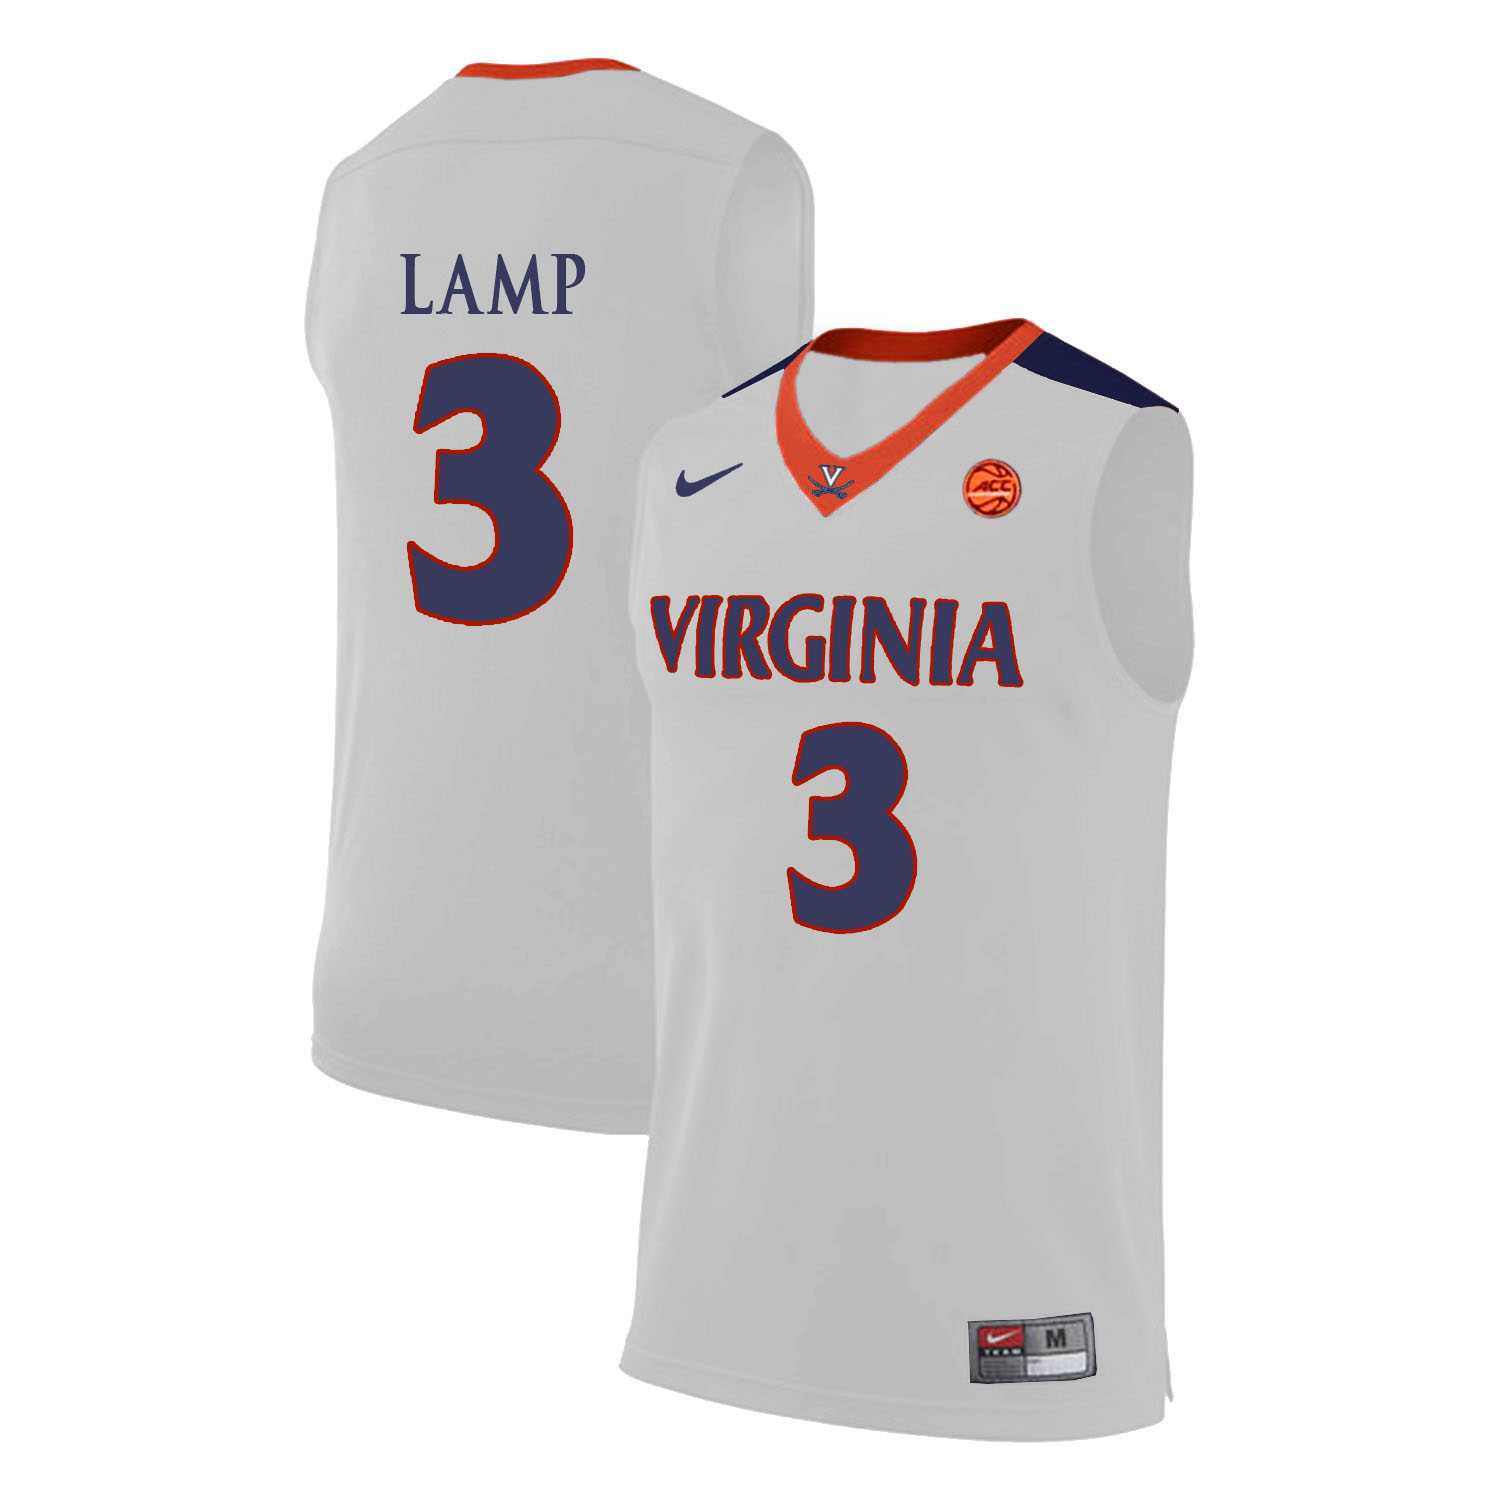 Virginia Cavaliers 3 Jeff Lamp White College Basketball Jersey Dzhi